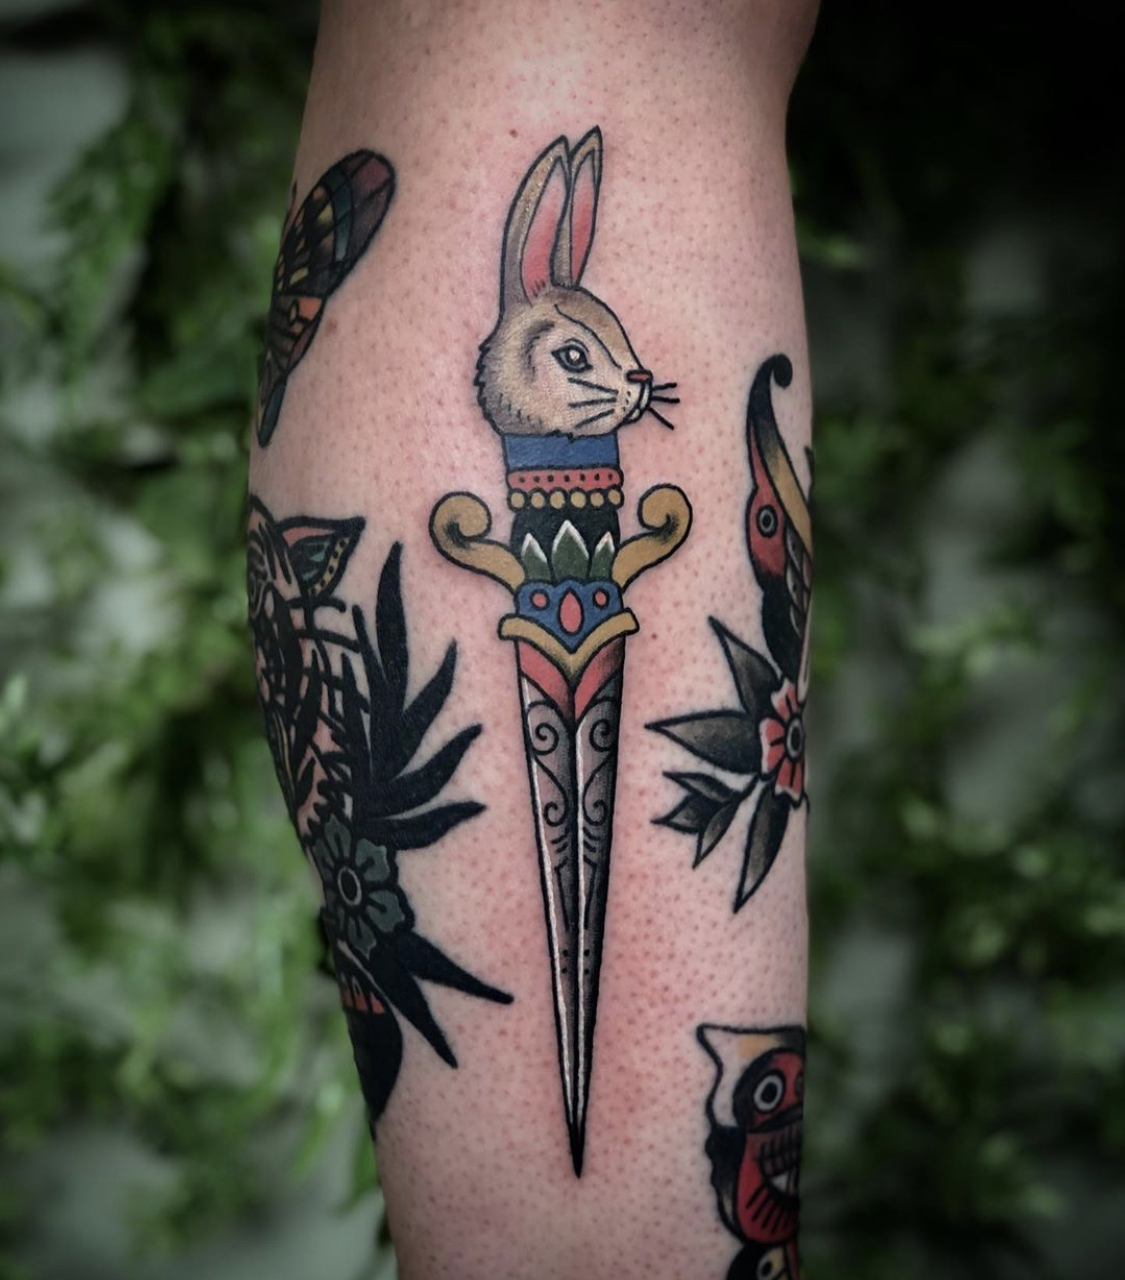 Bunny dagger tattoo by Erin Nicole